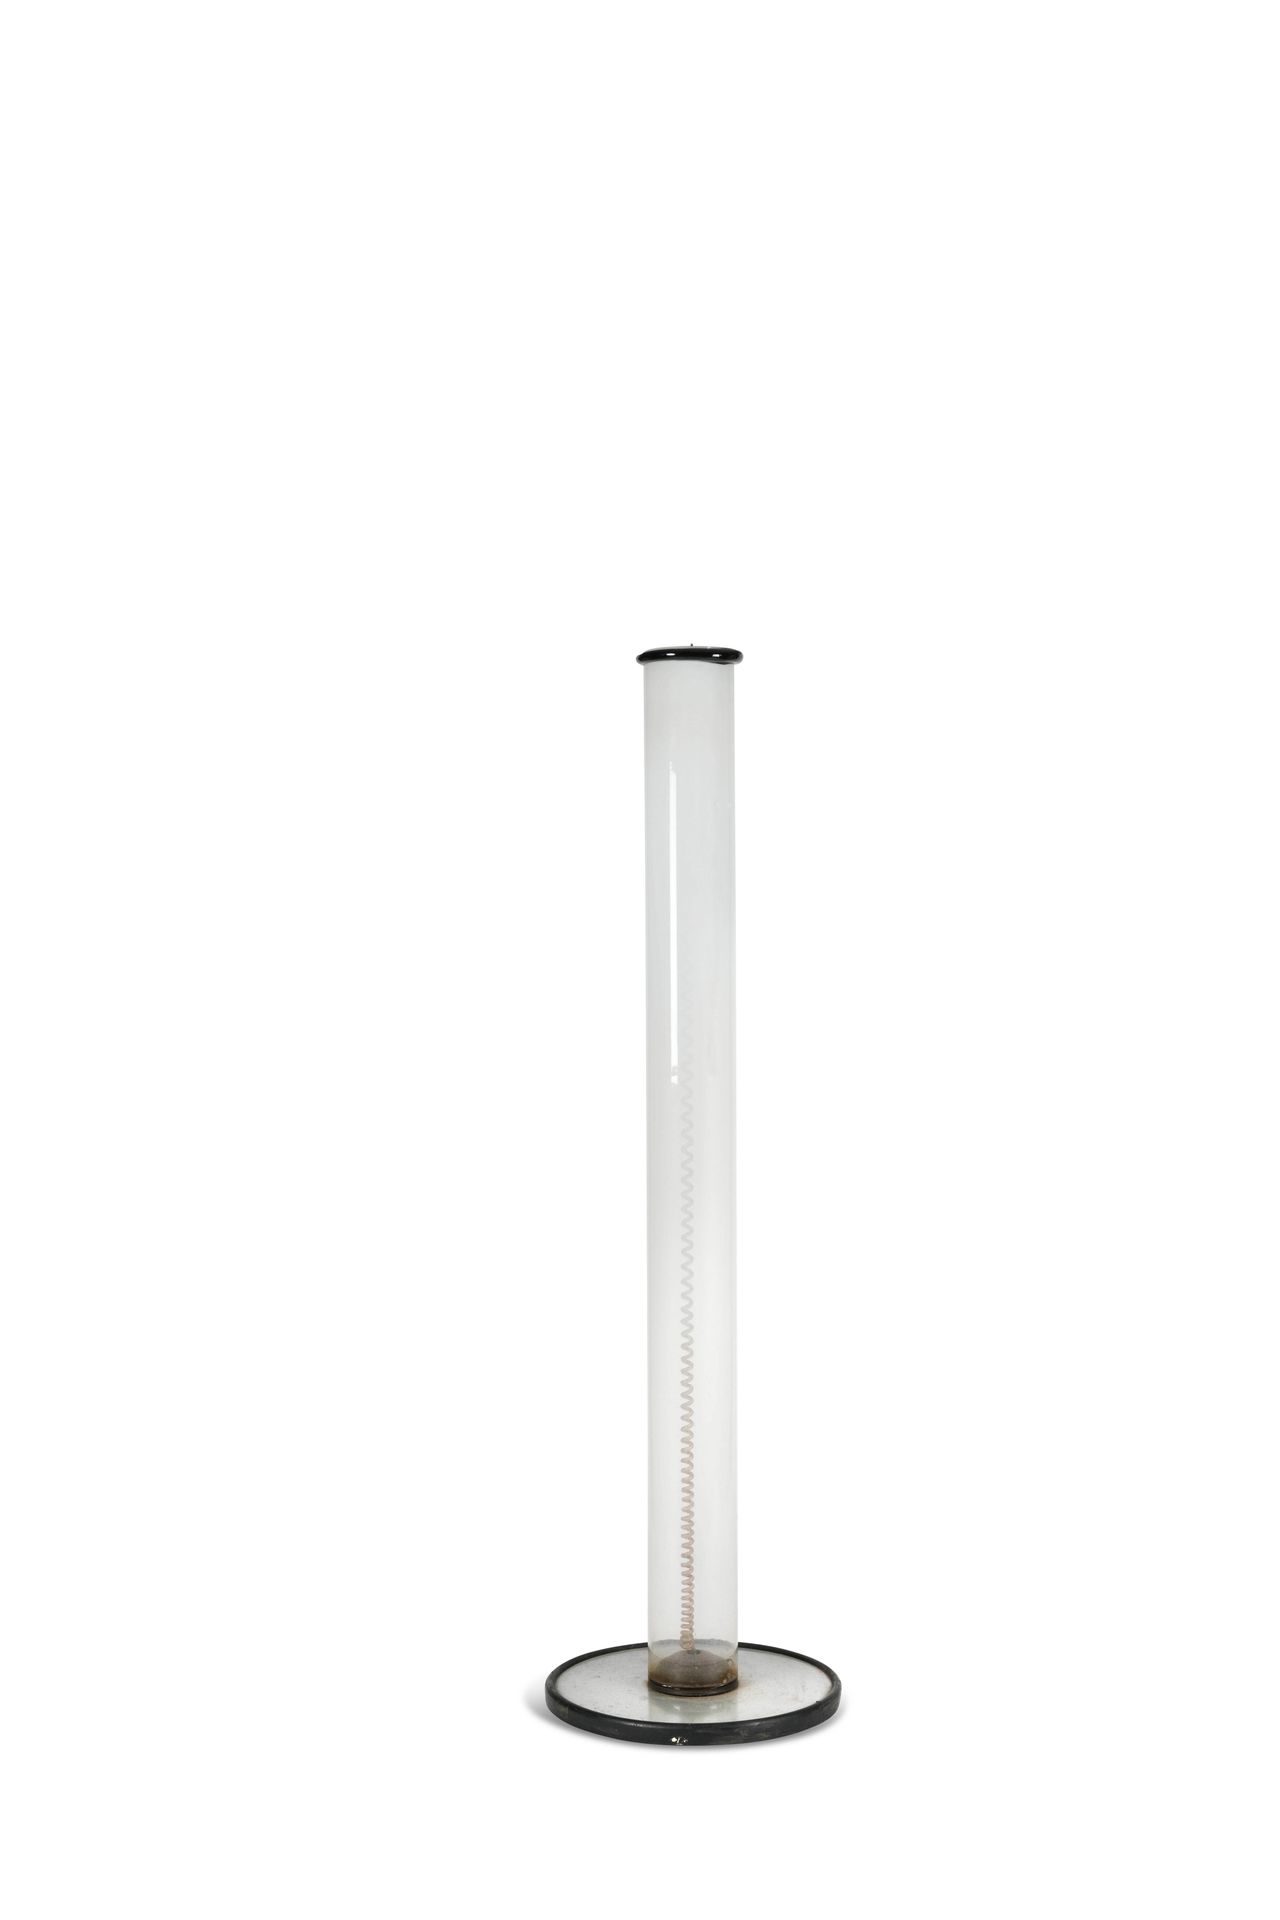 TRAVAIL ITALIEN Italian work Floor lamp Glass, metal, rubber H. : 160 cm.Circa 1&hellip;